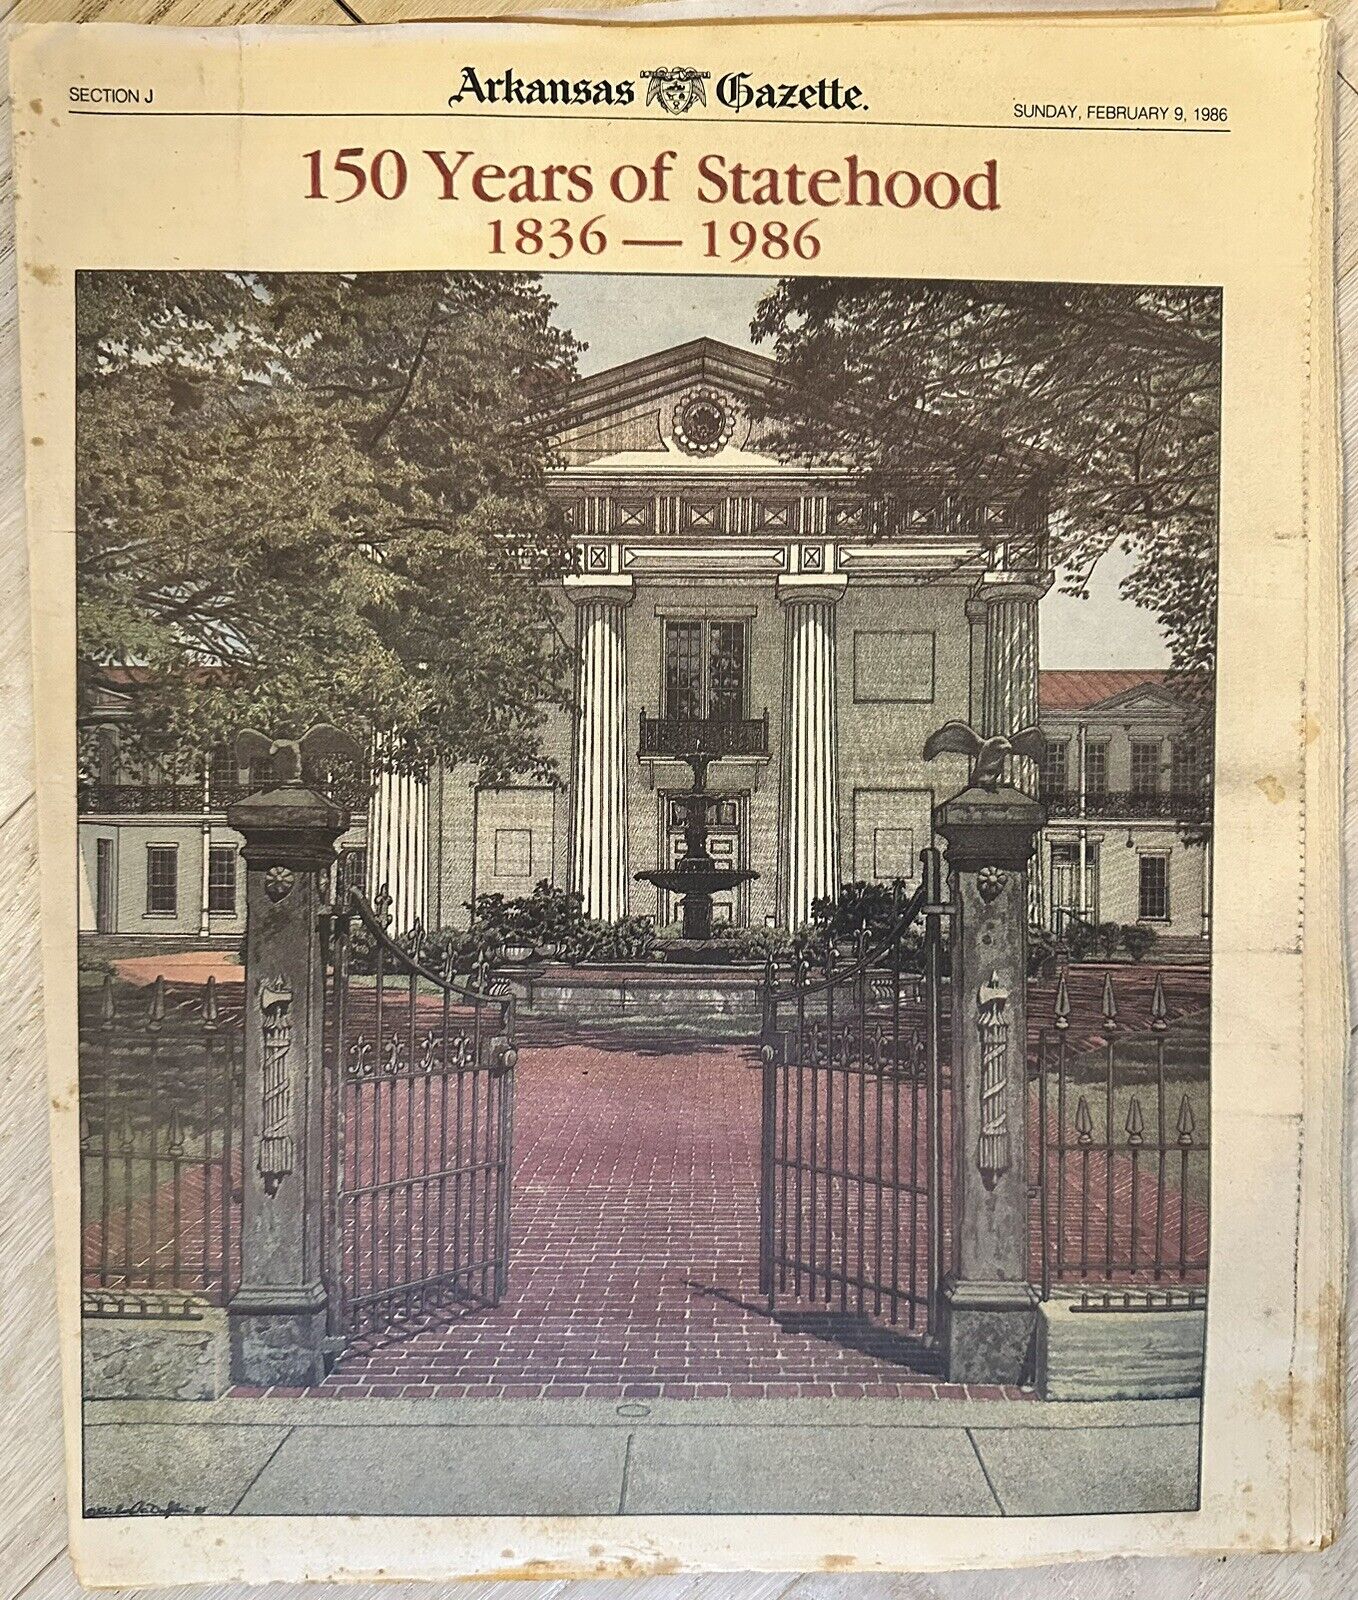 Arkansas Gazette 150 Years Of Statehood 1836-1986 Newspaper Insert 2/9/1986